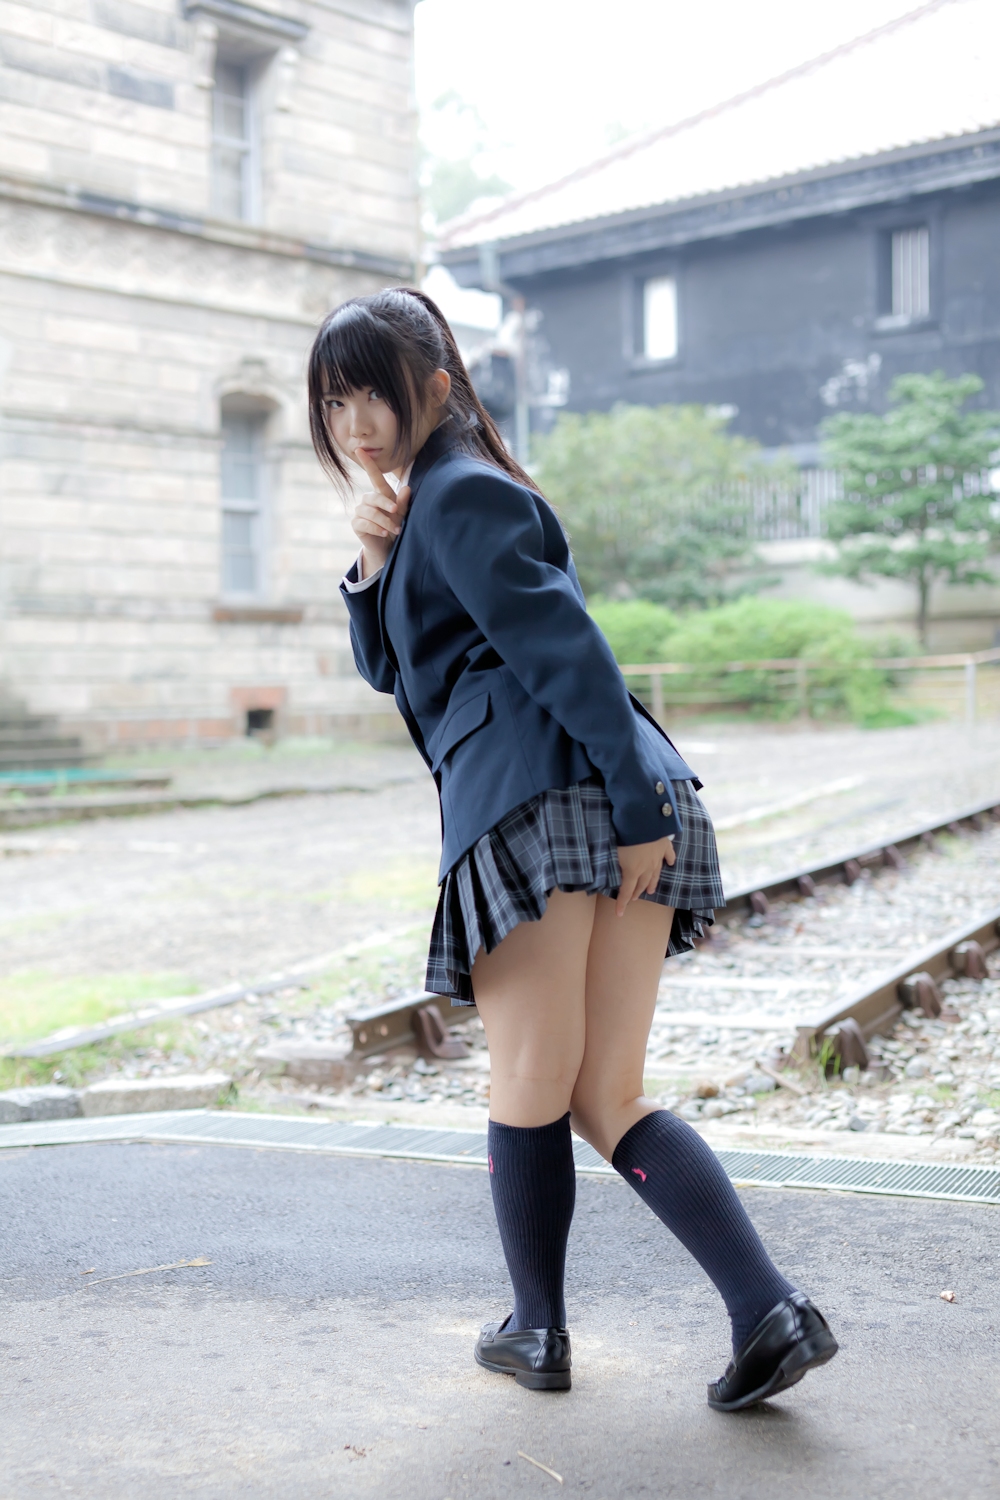 Japanese schoolgirl masturbation